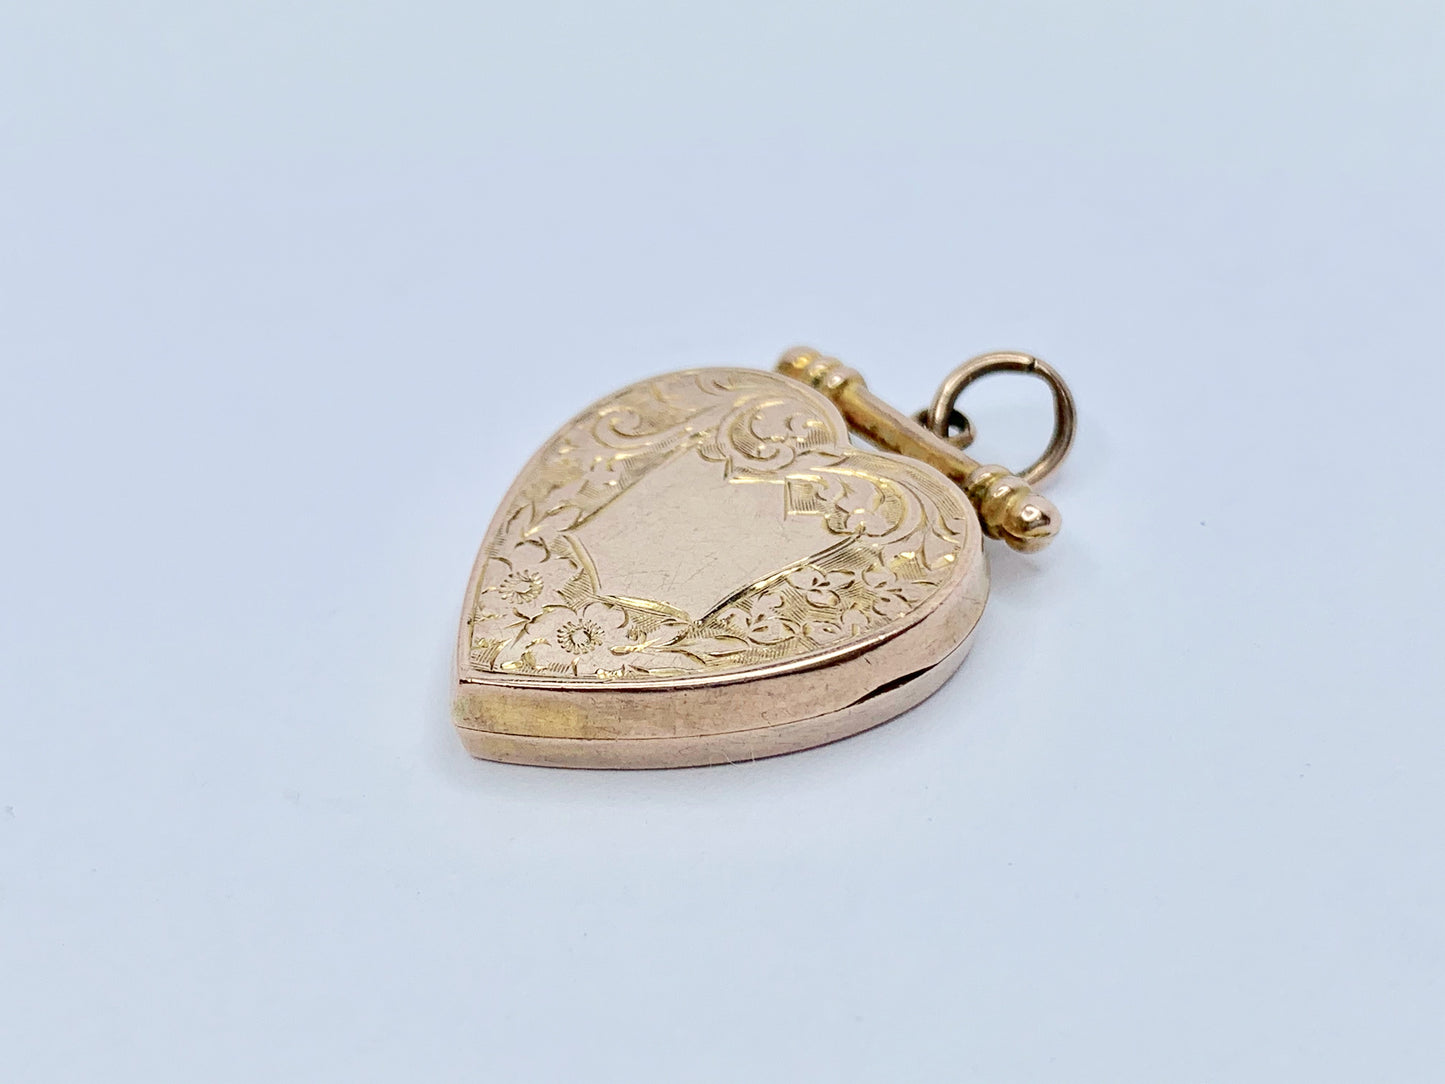 edwardian-9ct-gold-heart-locket